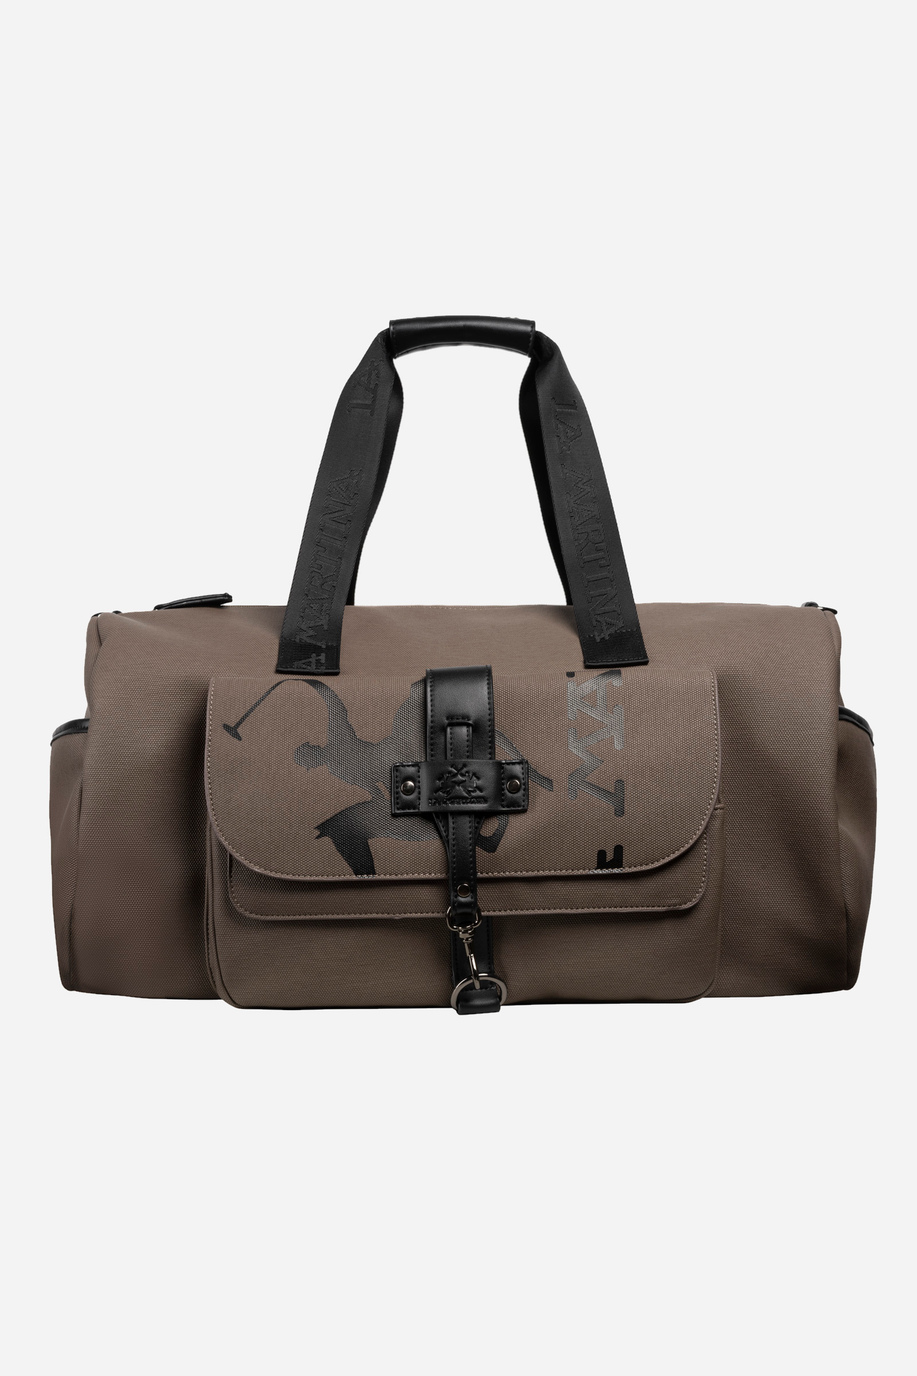 Men's duffle bag In Pu - Gift ideas for him | La Martina - Official Online Shop